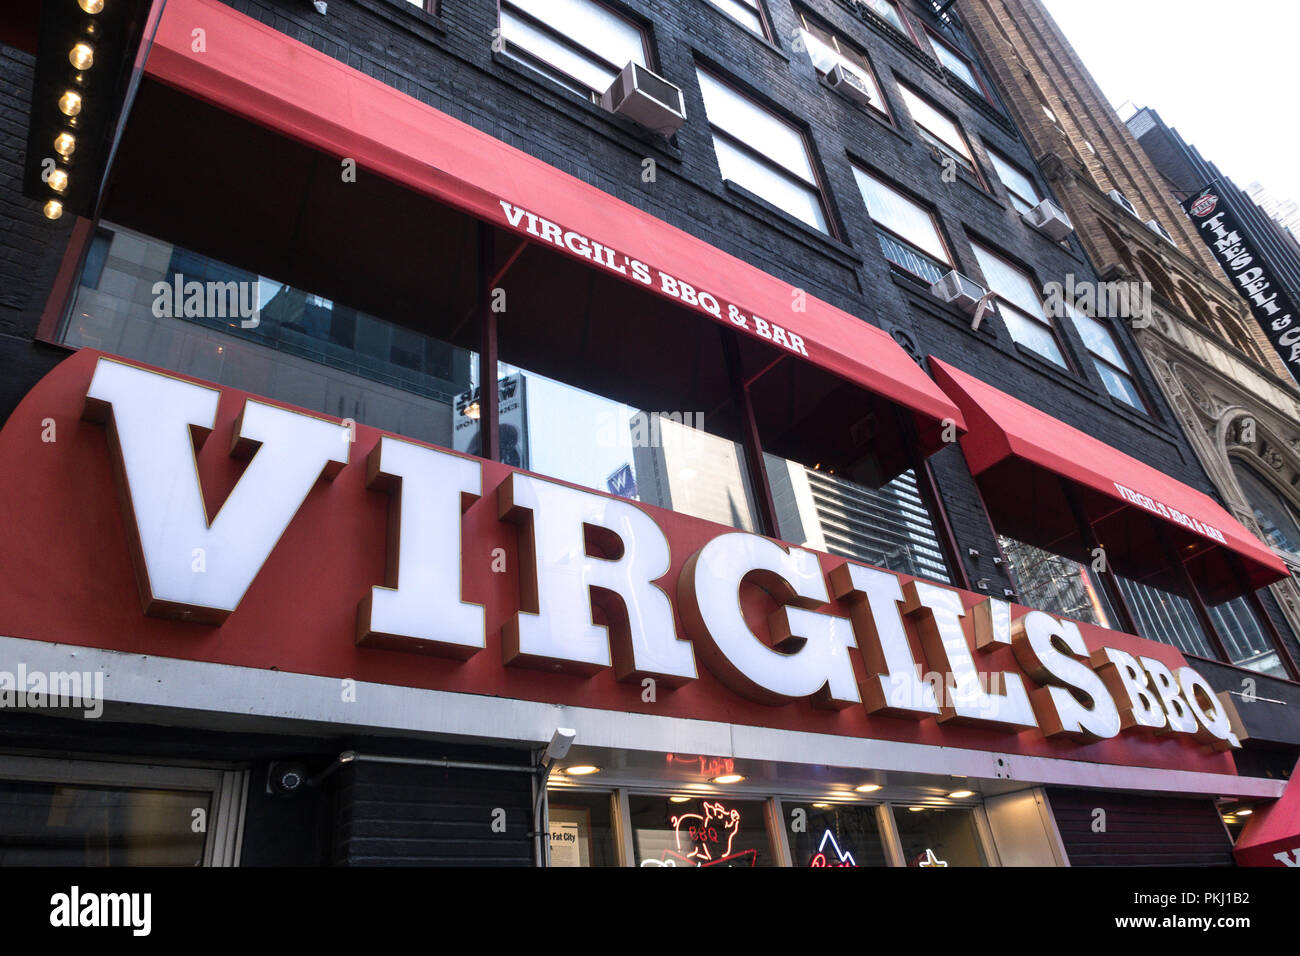 Vergils echten BBQ Restaurant in Times Square, New York City, USA Stockfoto